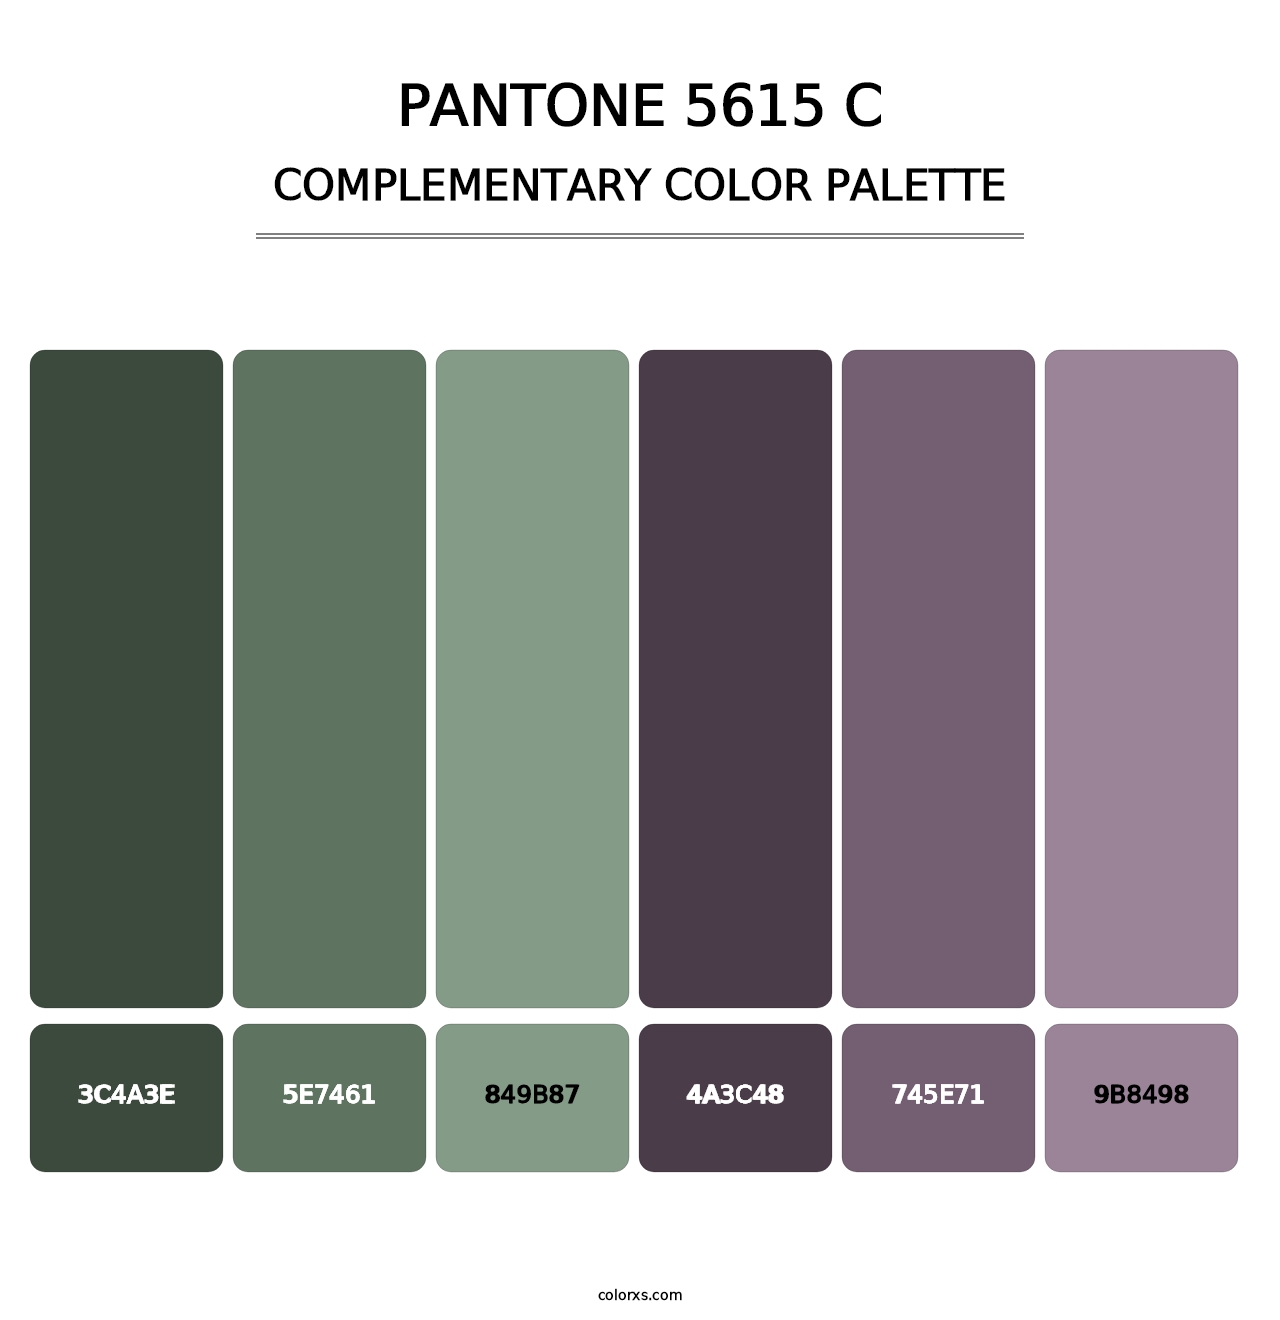 PANTONE 5615 C - Complementary Color Palette